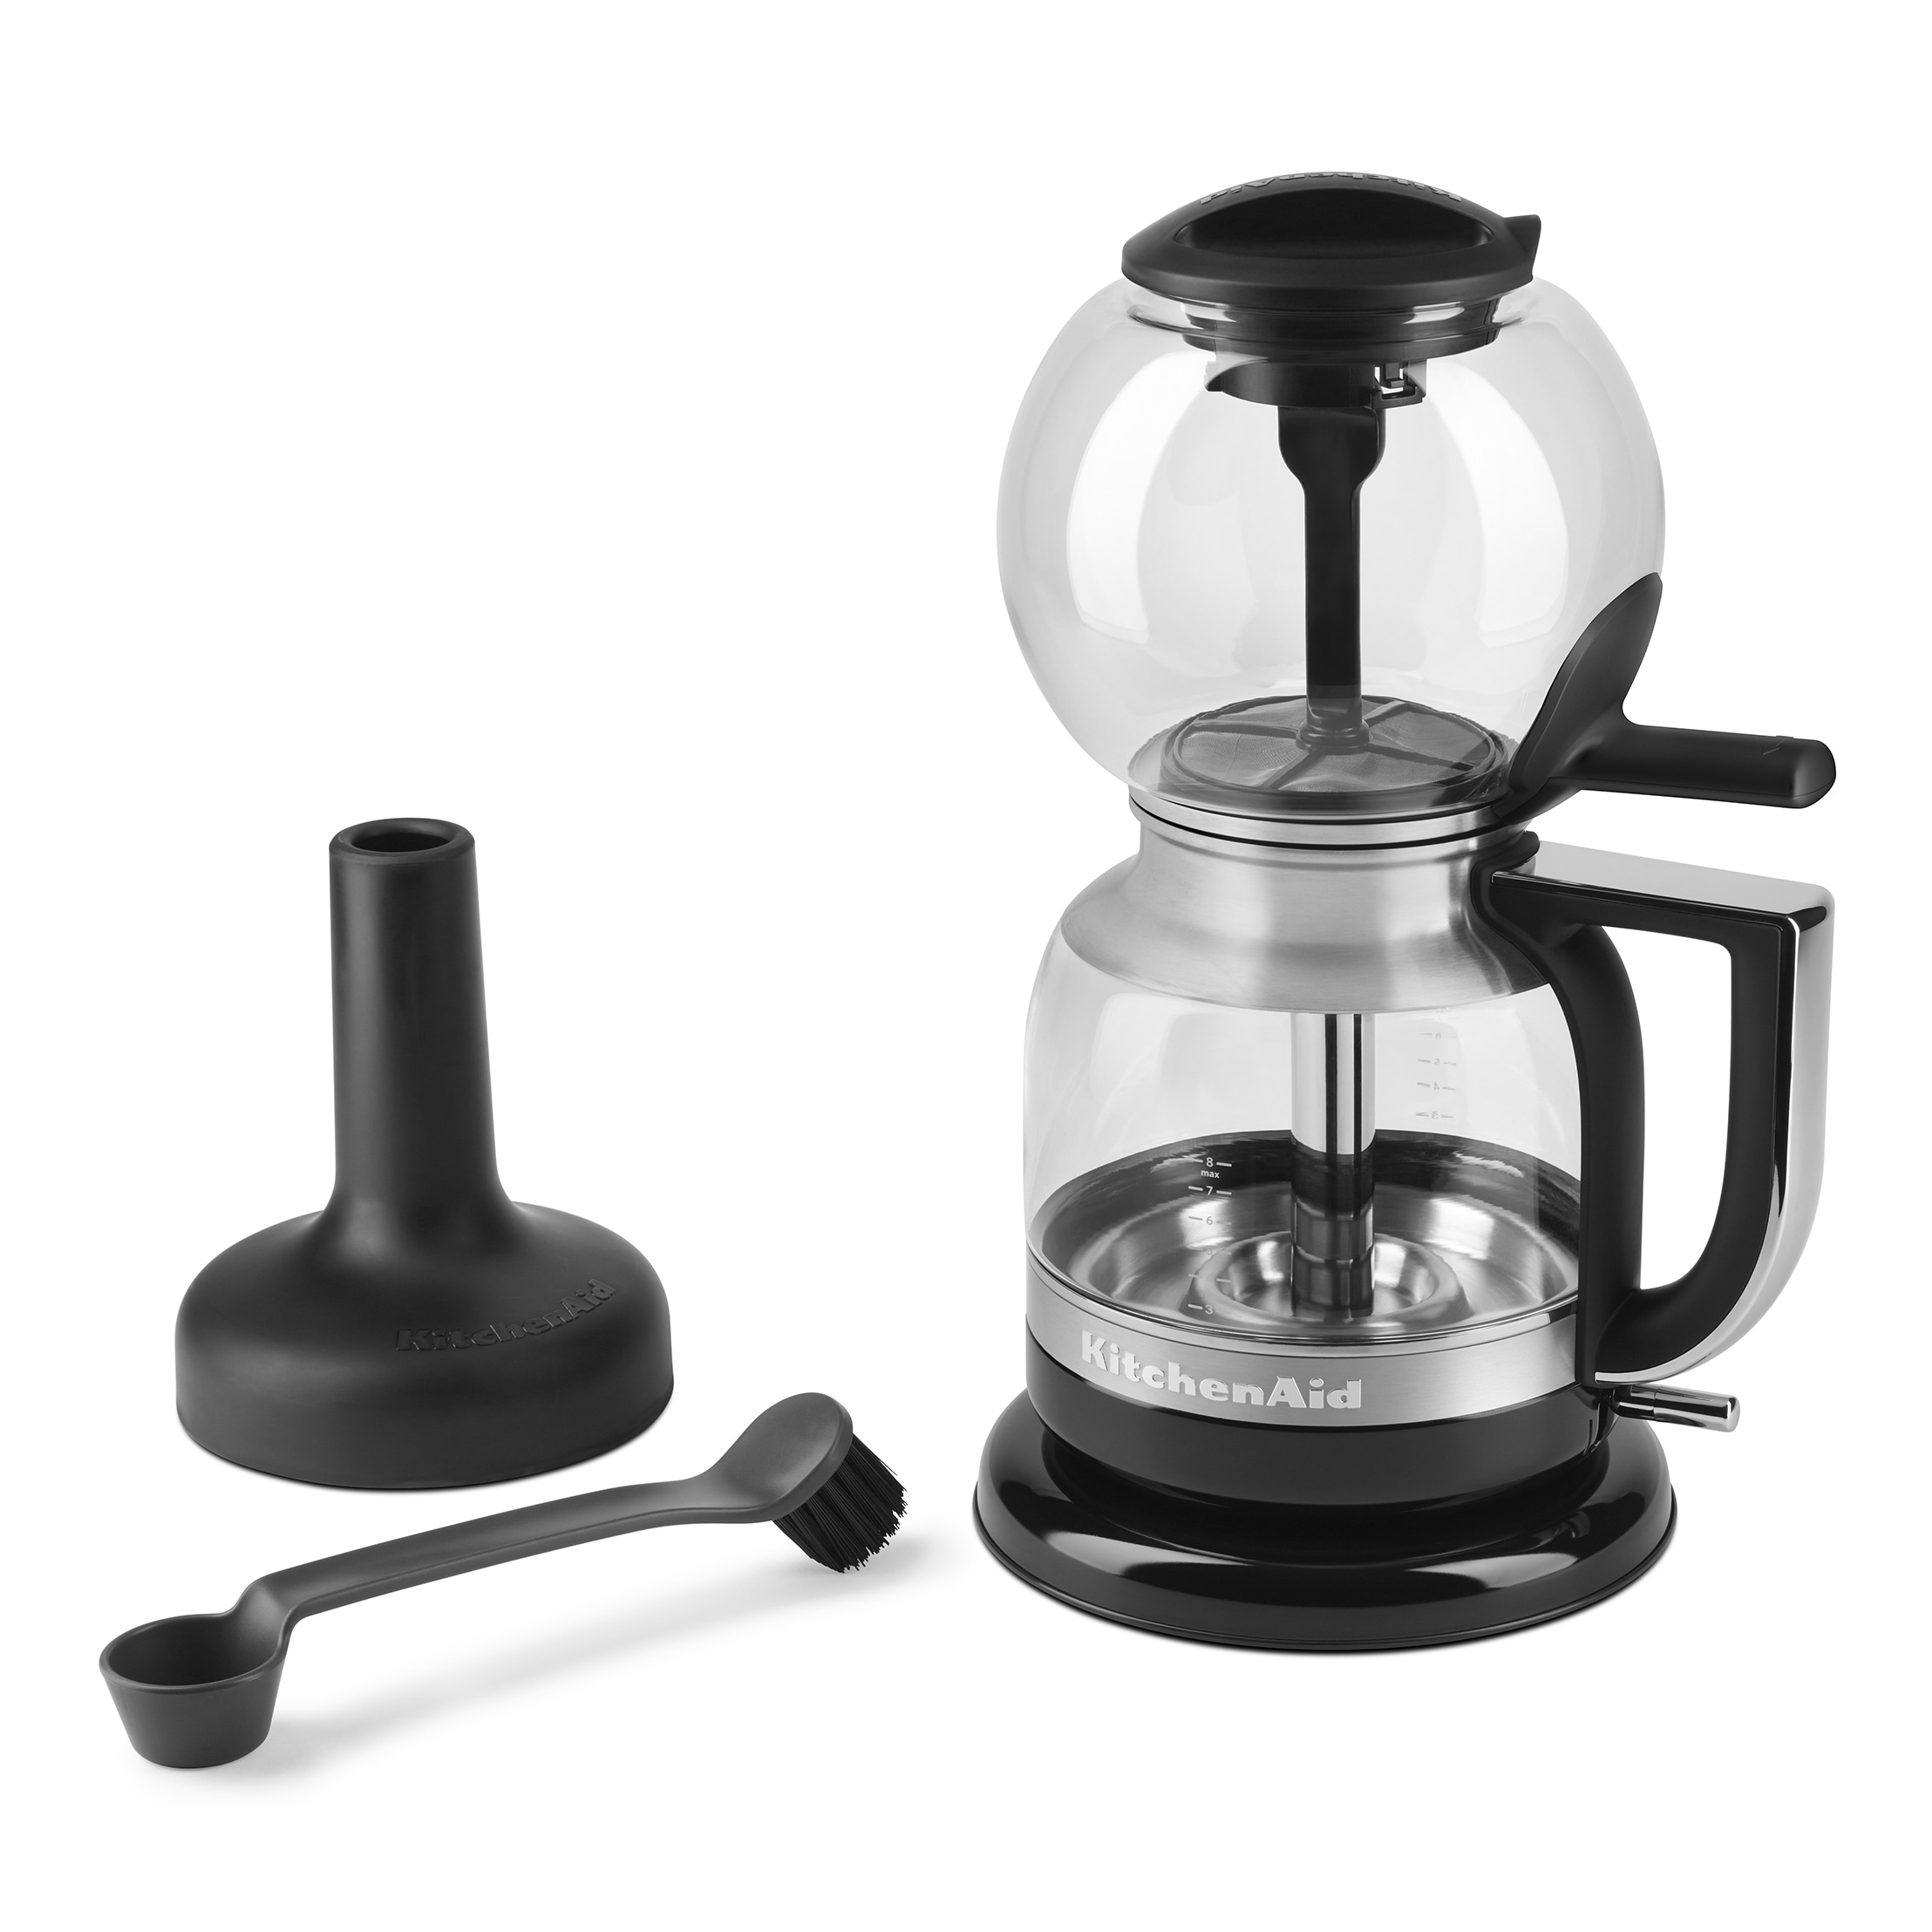 https://ak1.ostkcdn.com/images/products/12753451/KitchenAid-KCM0812OB-Onyx-Black-8-Cup-Siphon-Coffee-Brewer-1734c5a0-3d8b-4373-9d04-ec3d4bfefb3e.jpg